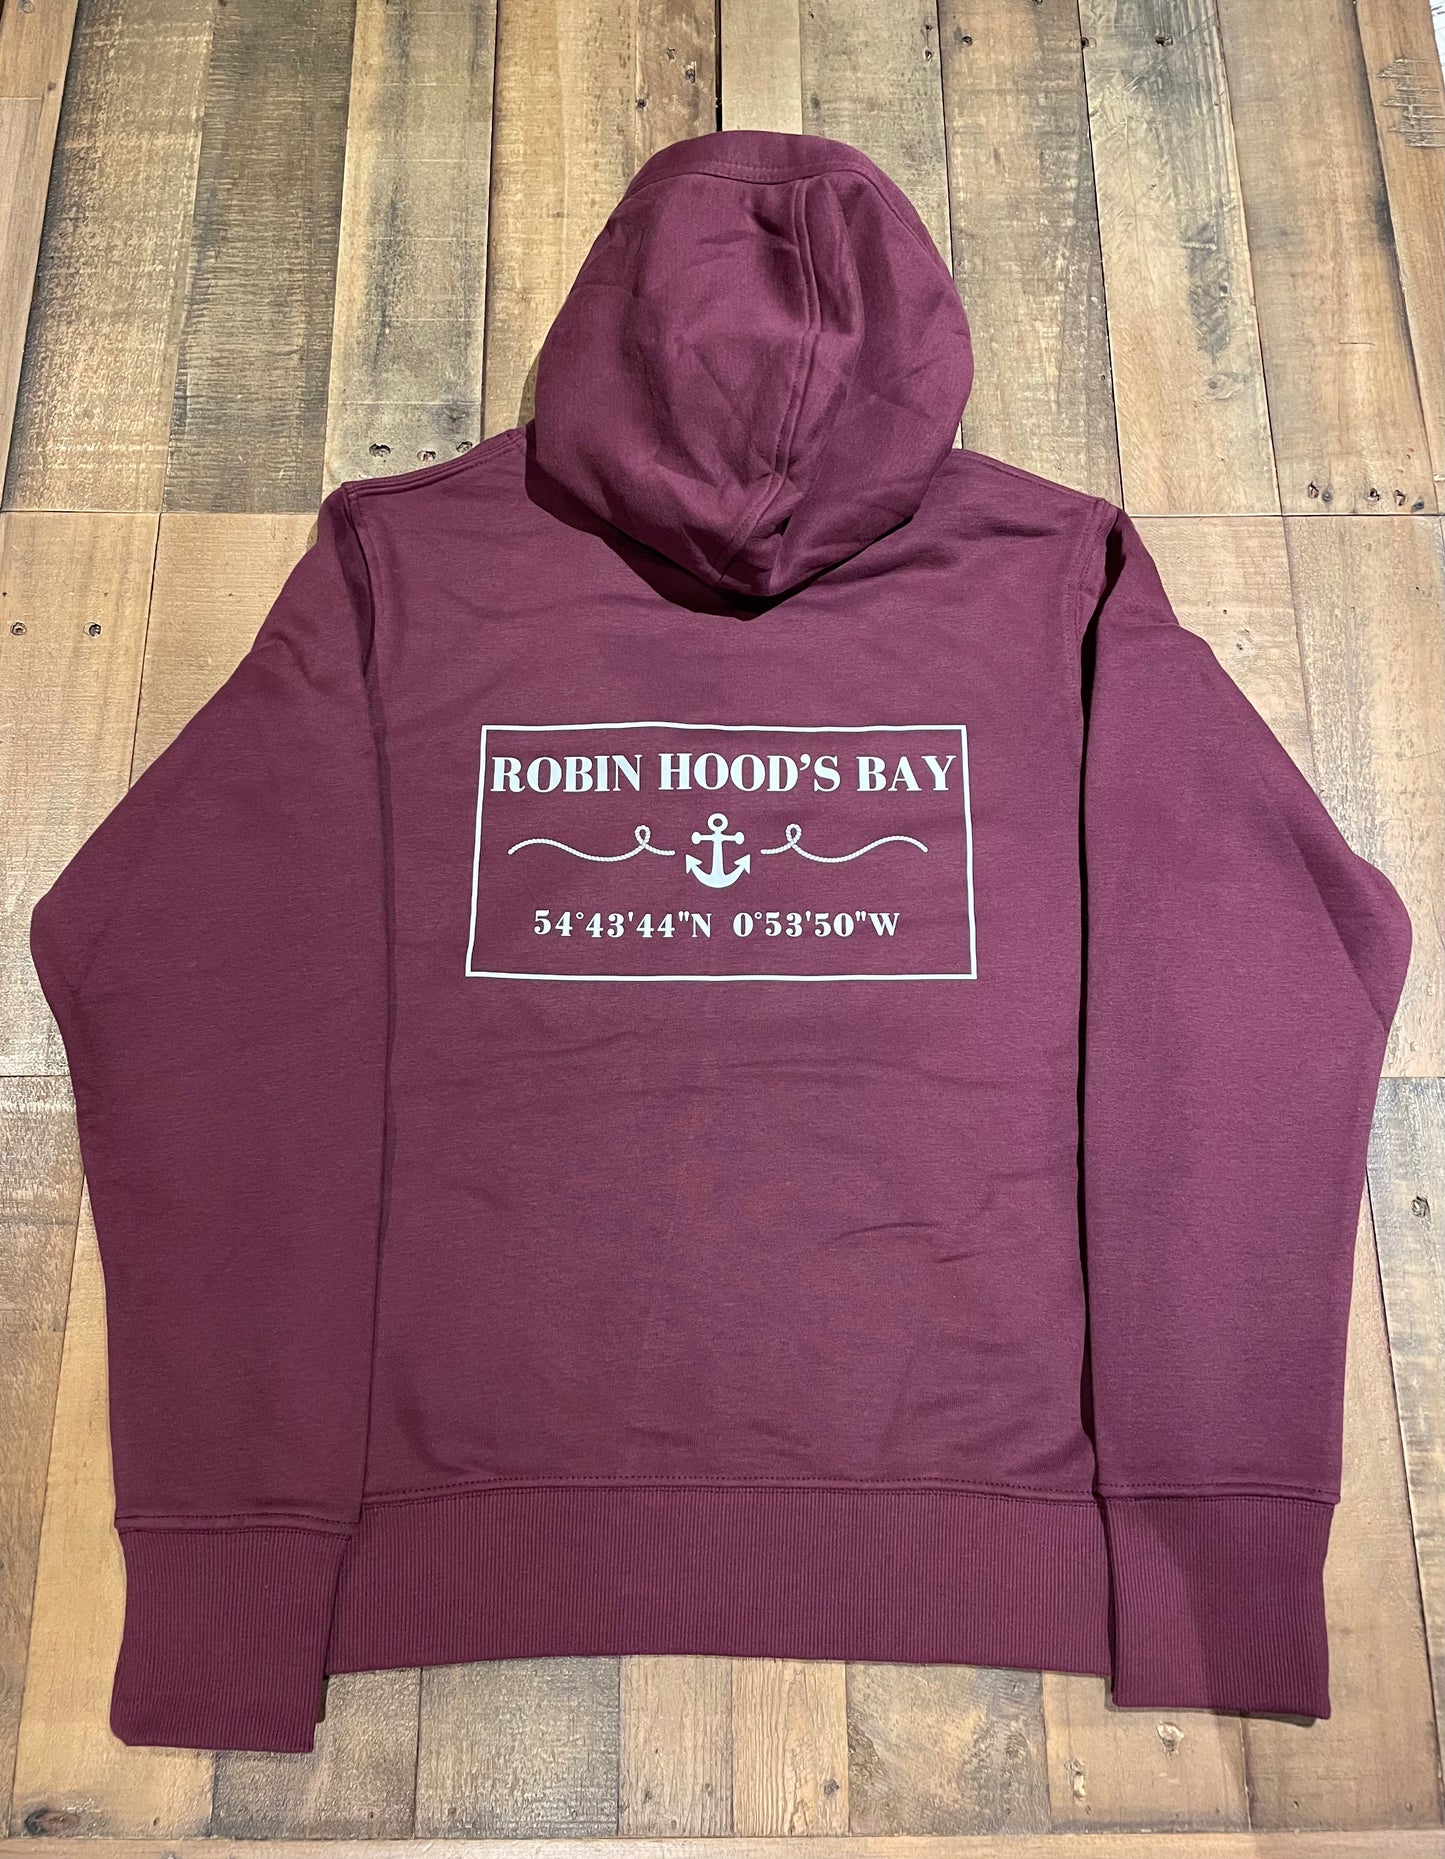 The women’s burgundy Robin Hood’s Bay hoodie from The Bay Company